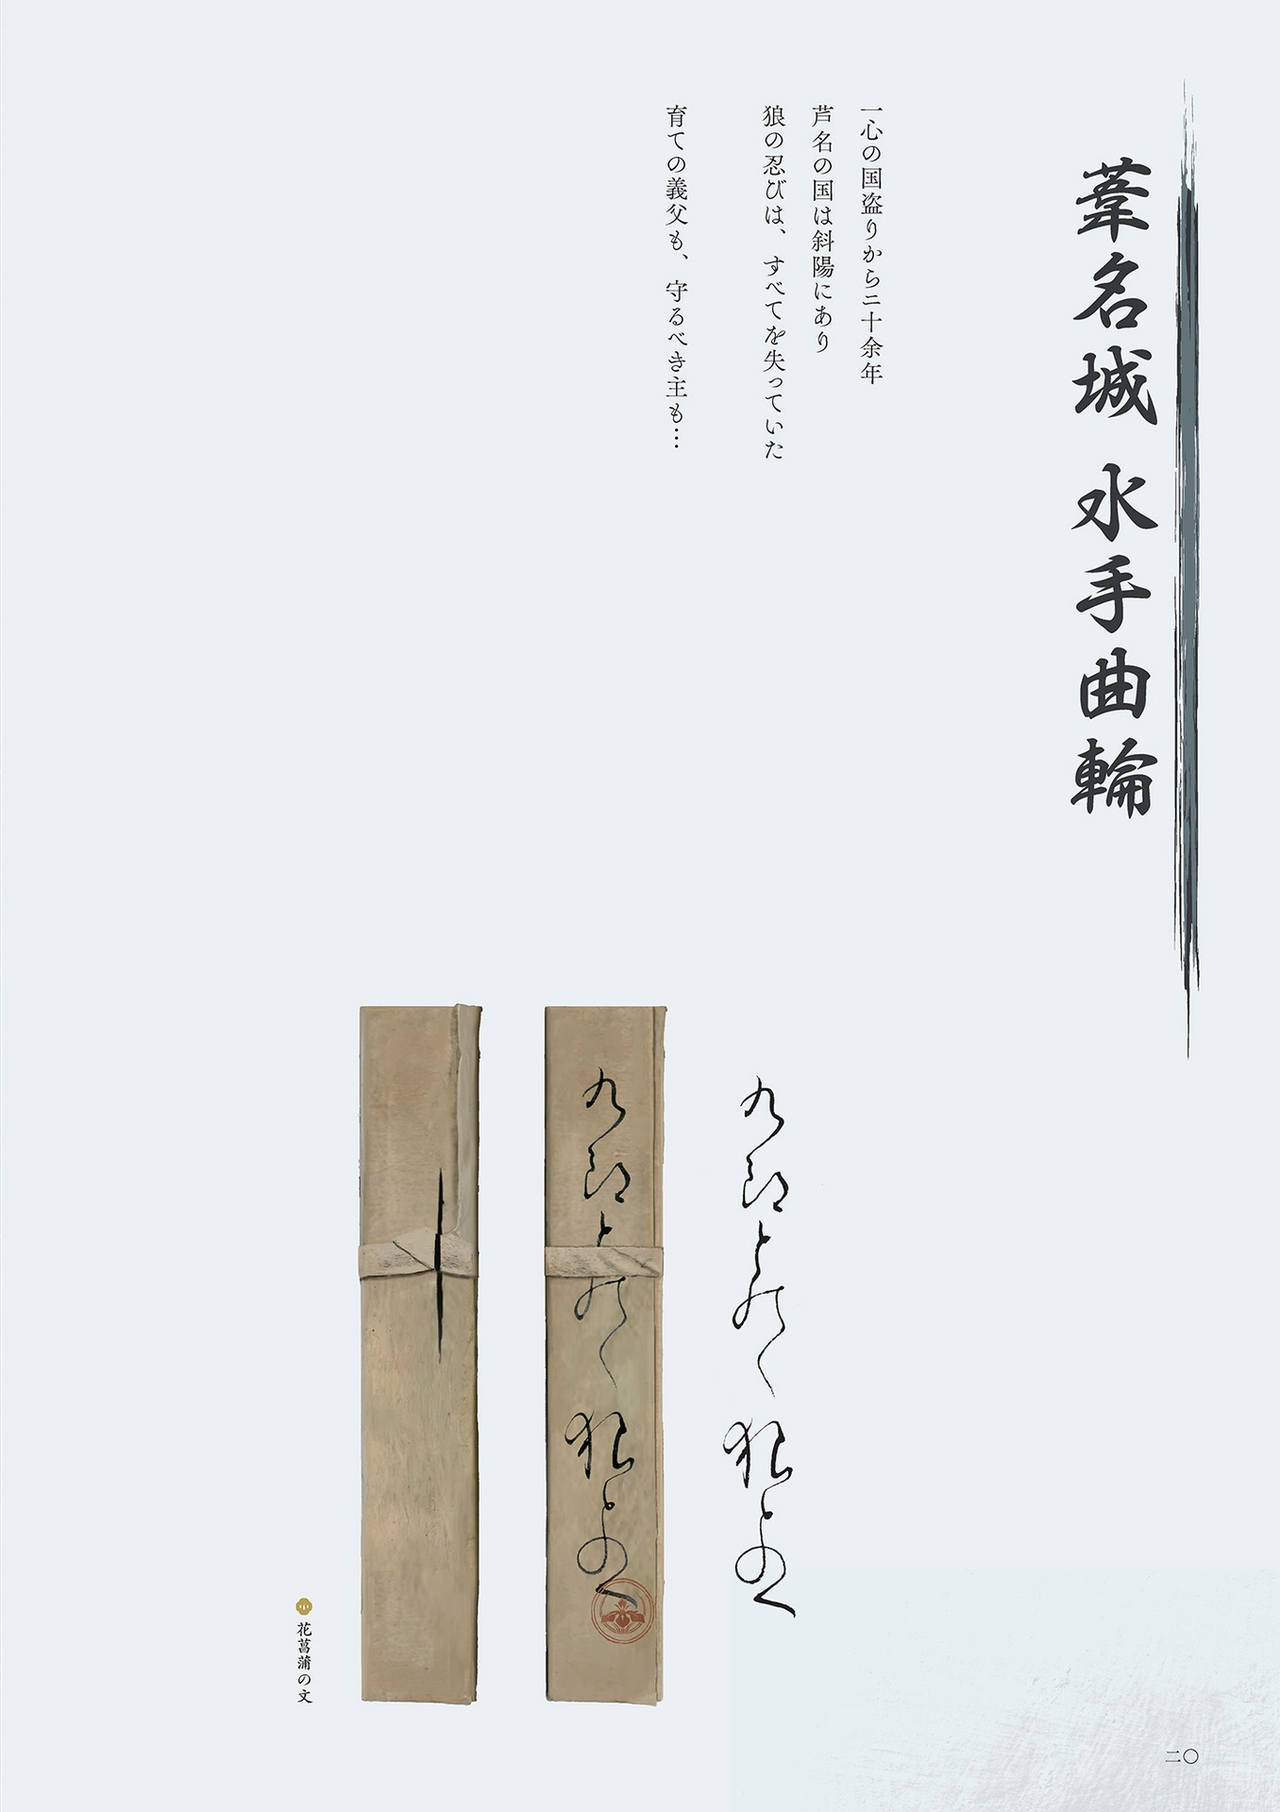 SEKIRO - SHADOWS DIE TWICE Official Artworks 15